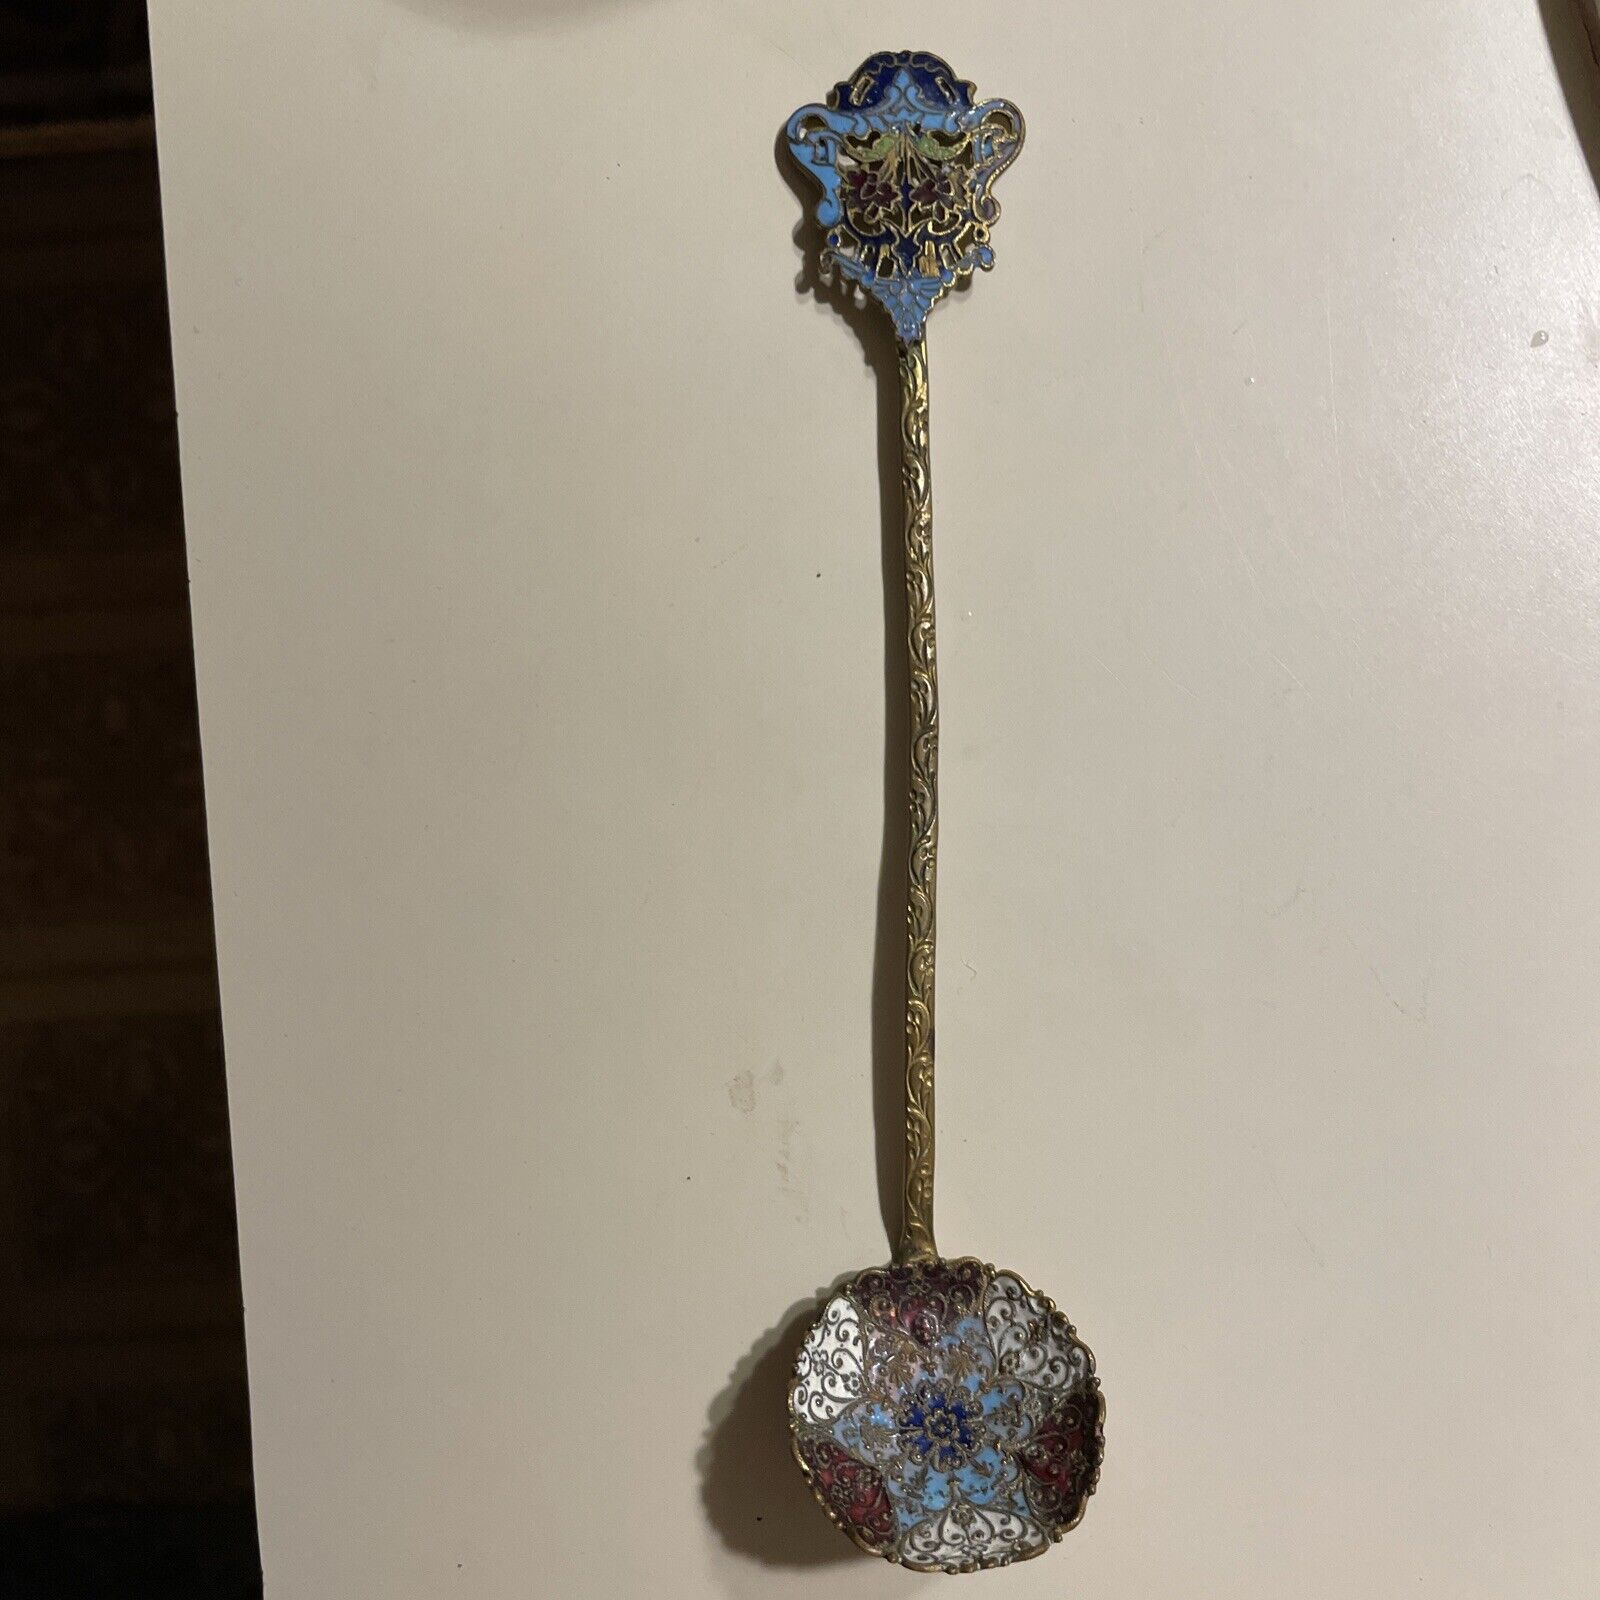 SALE, Stunning & Rare enamel handle bronze Spoon